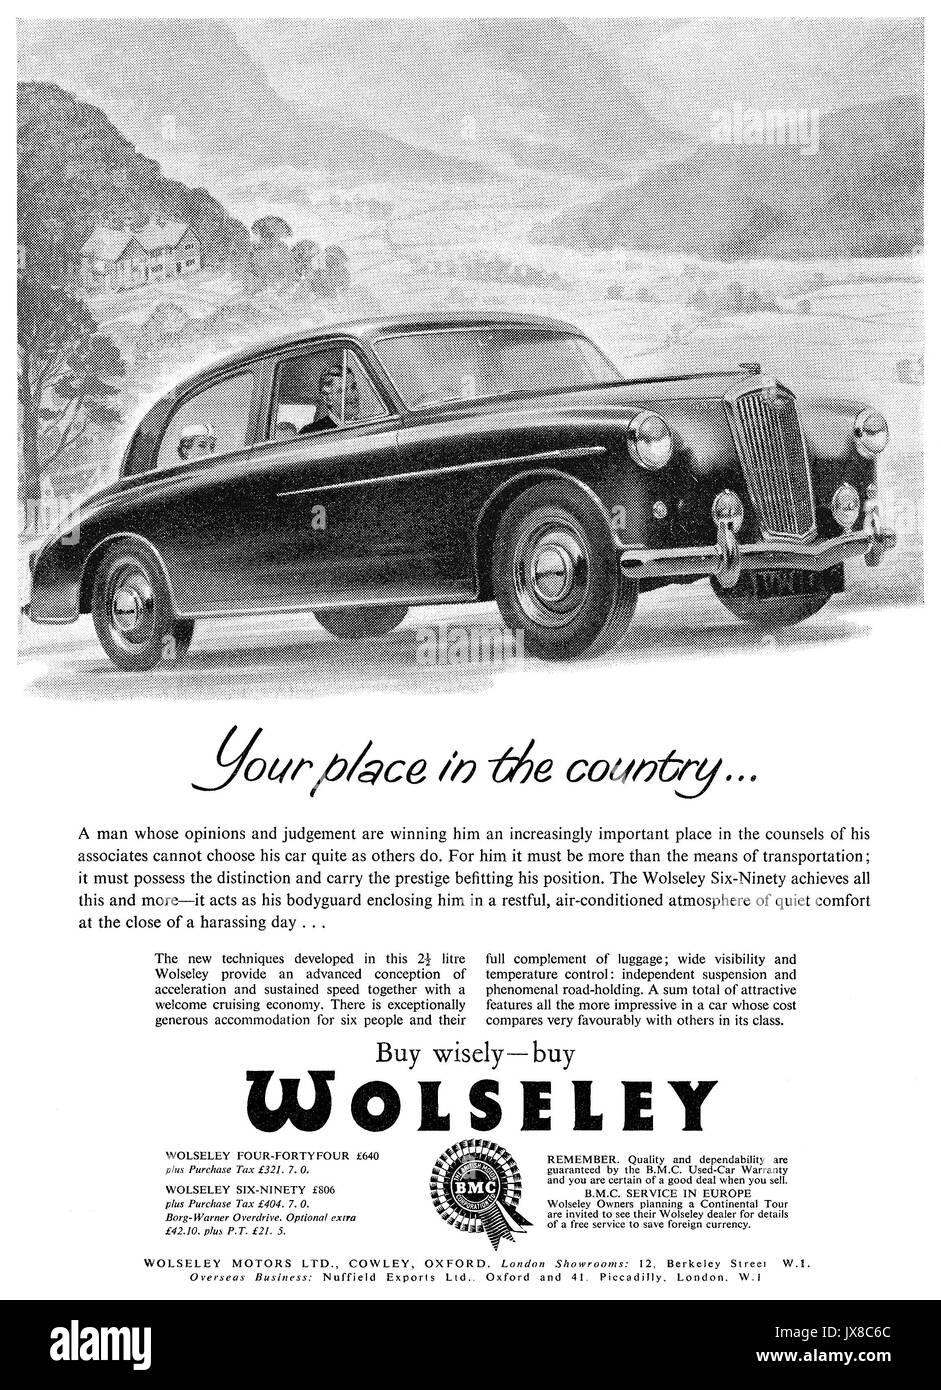 1956 British advertisement for the Wolseley Six-Ninety motor car. Stock Photo